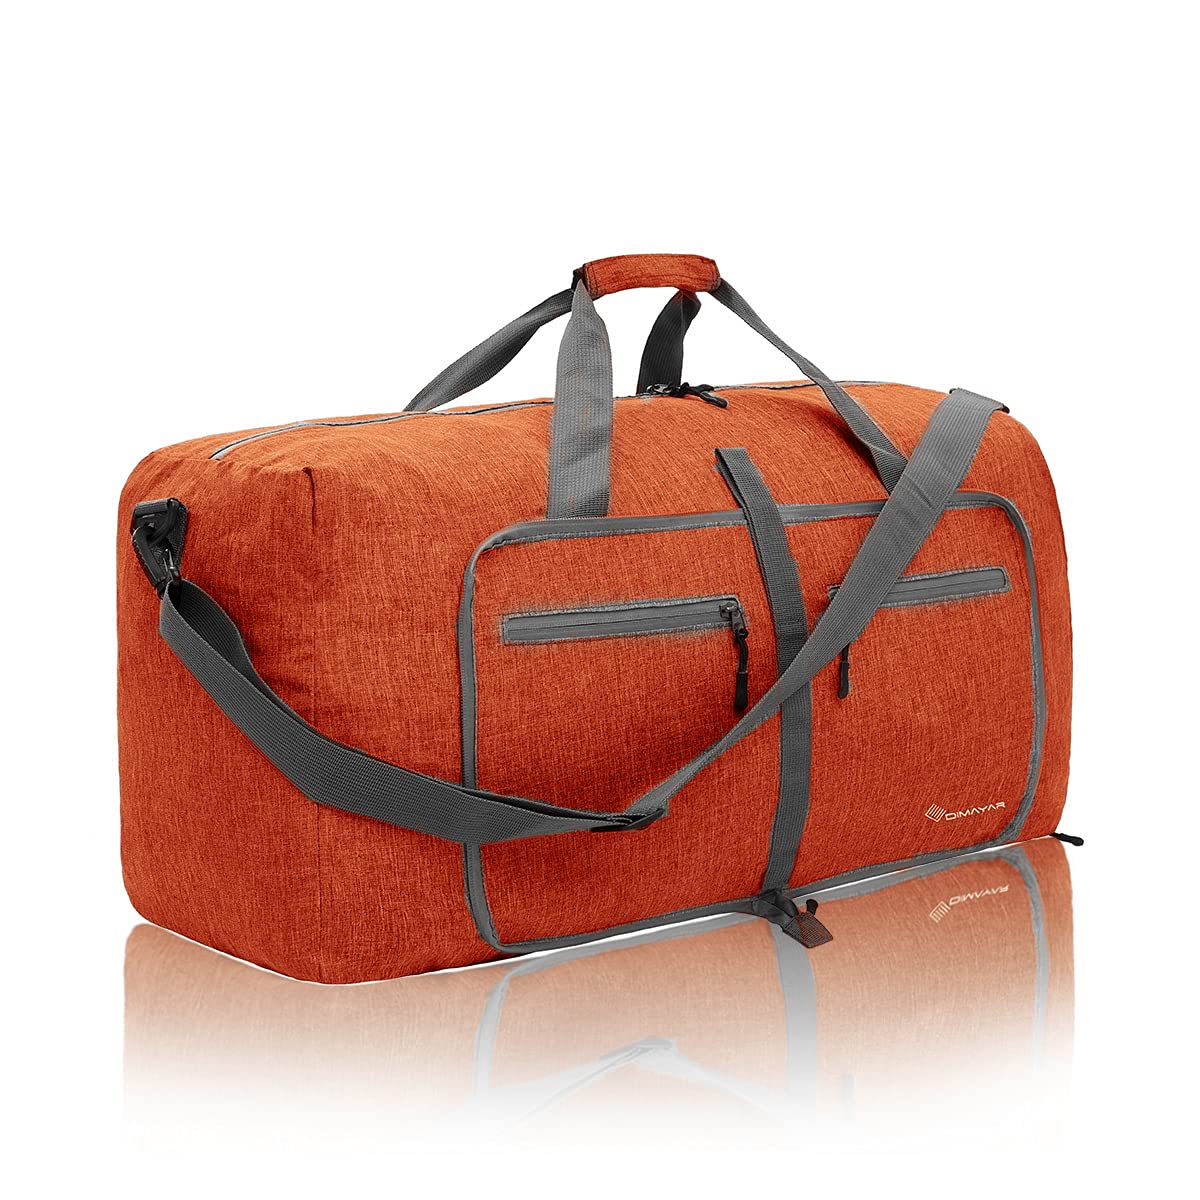 Dimayar Duffel Bag 65L Packable Duffle Bag With Shoes Compartment Unisex Travel Bag Water-Resistant Duffle Bag(Orange,65L)